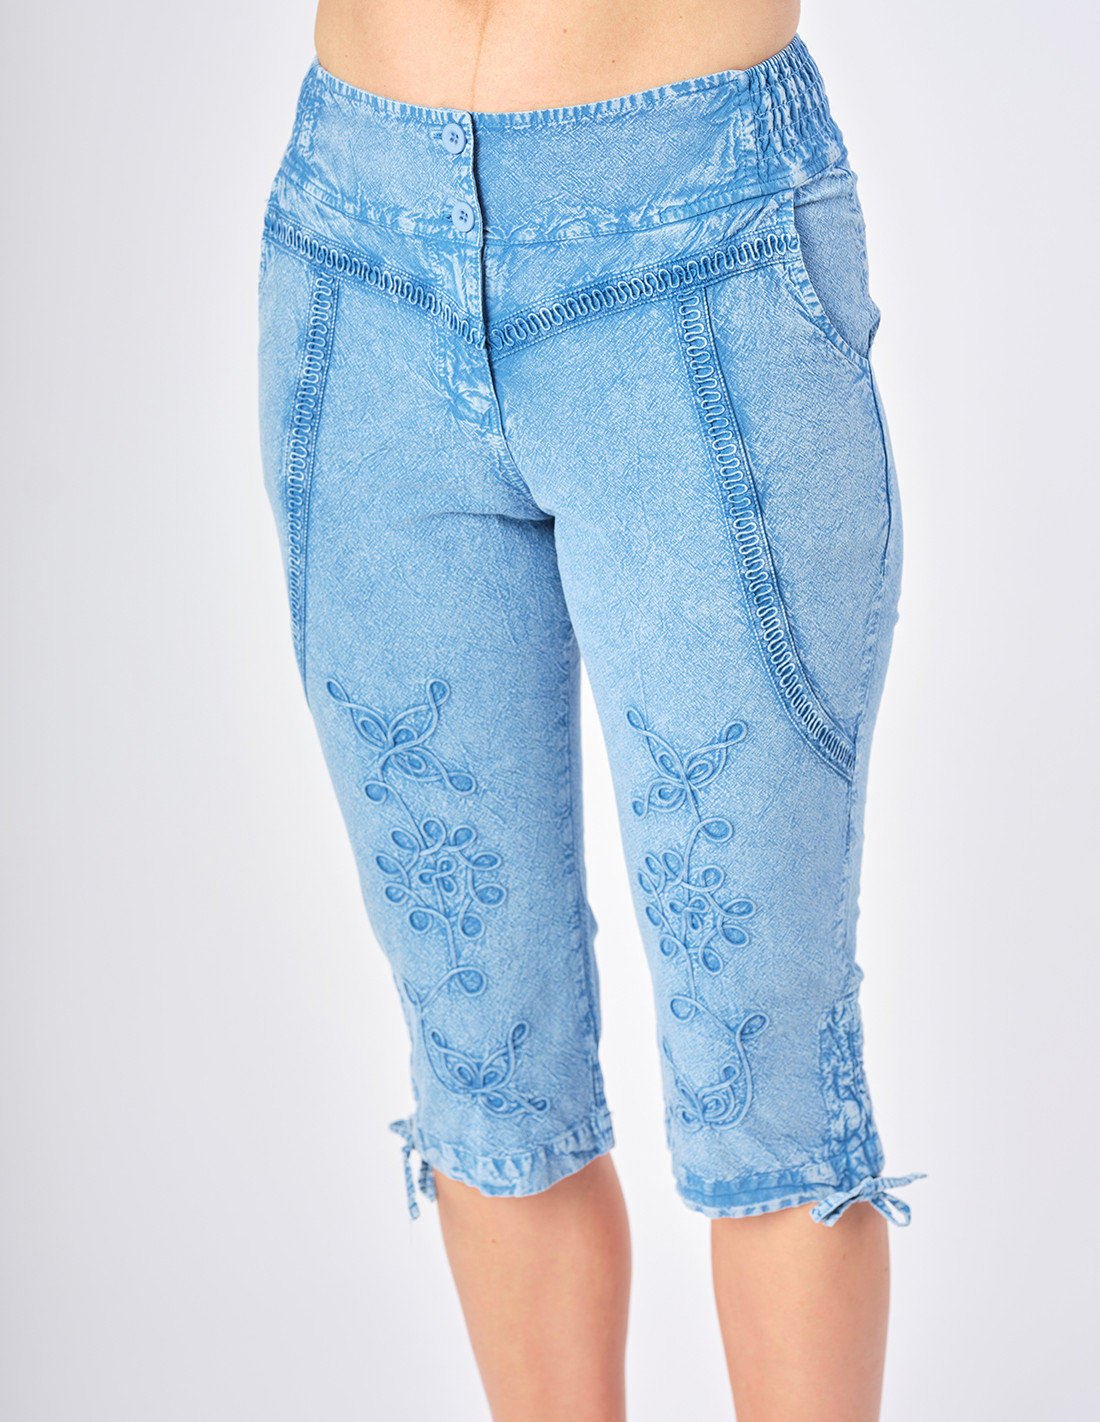 Women's 100% Cotton Cropped & Capri Pants | Nordstrom